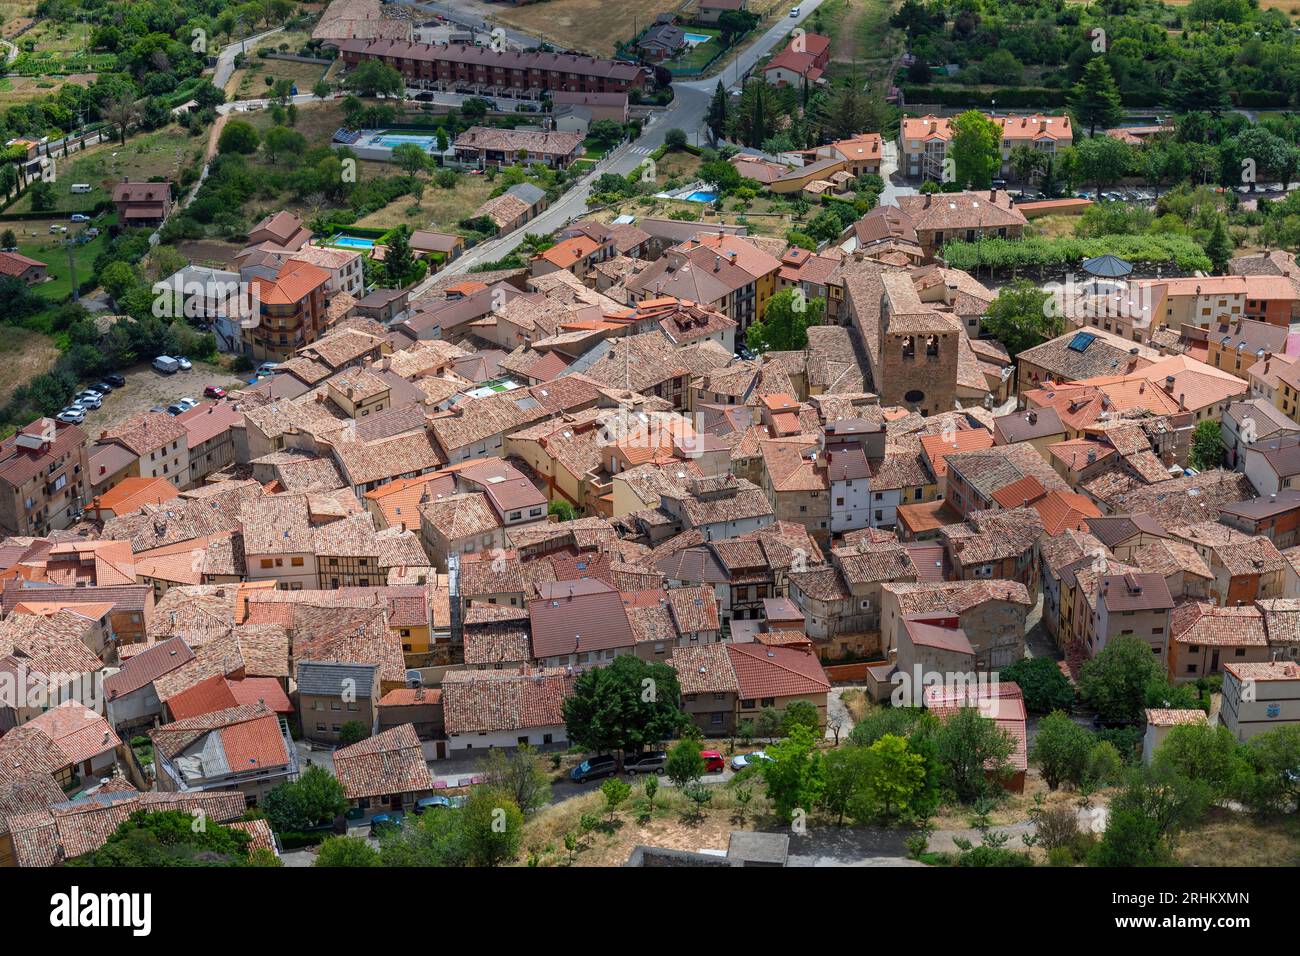 Europe, Spain, Castile and Leon, Poza de la Sal, Views of the Village Centre from Rojas Castle above Stock Photo